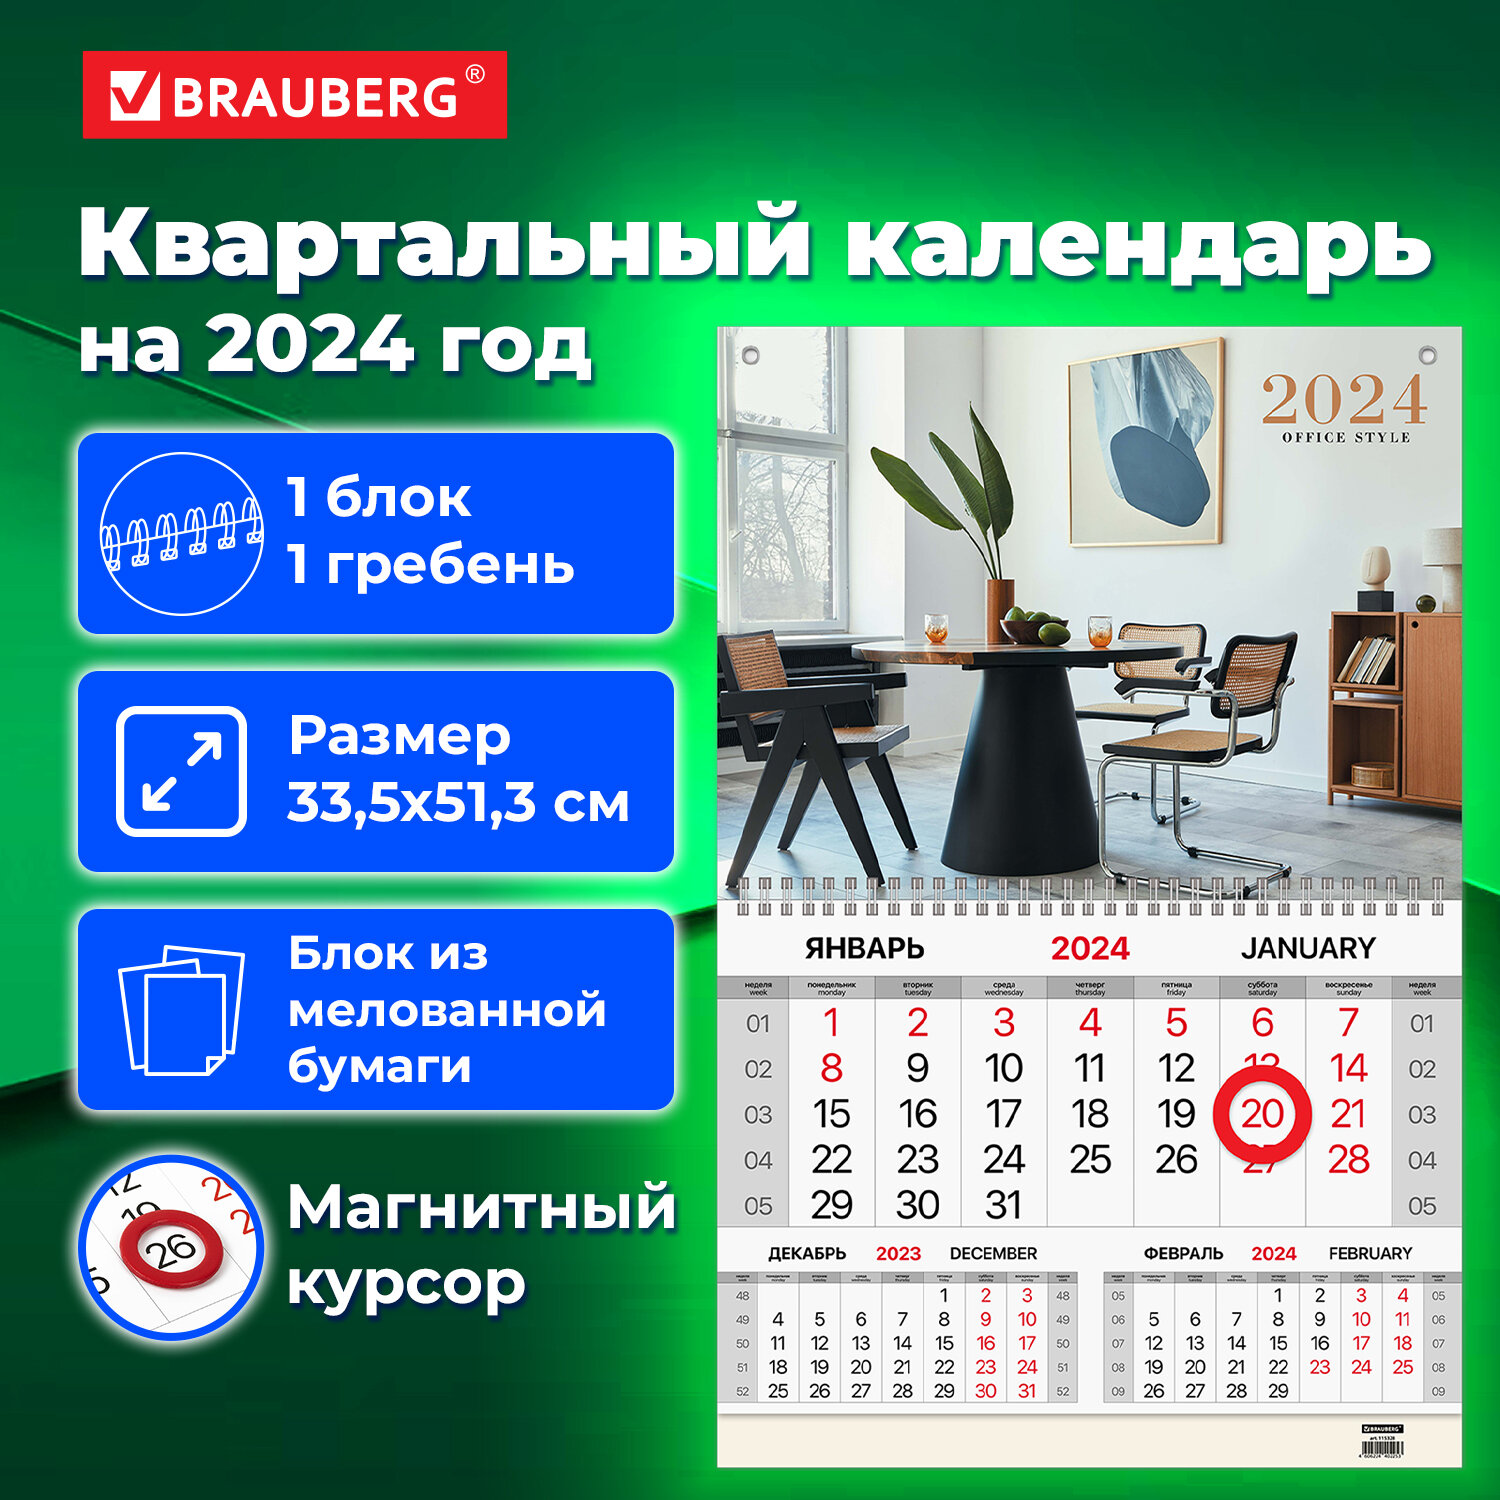 Календарь квартальный на 2024 г., 1 блок, магнитный курсор, Brauberg, 